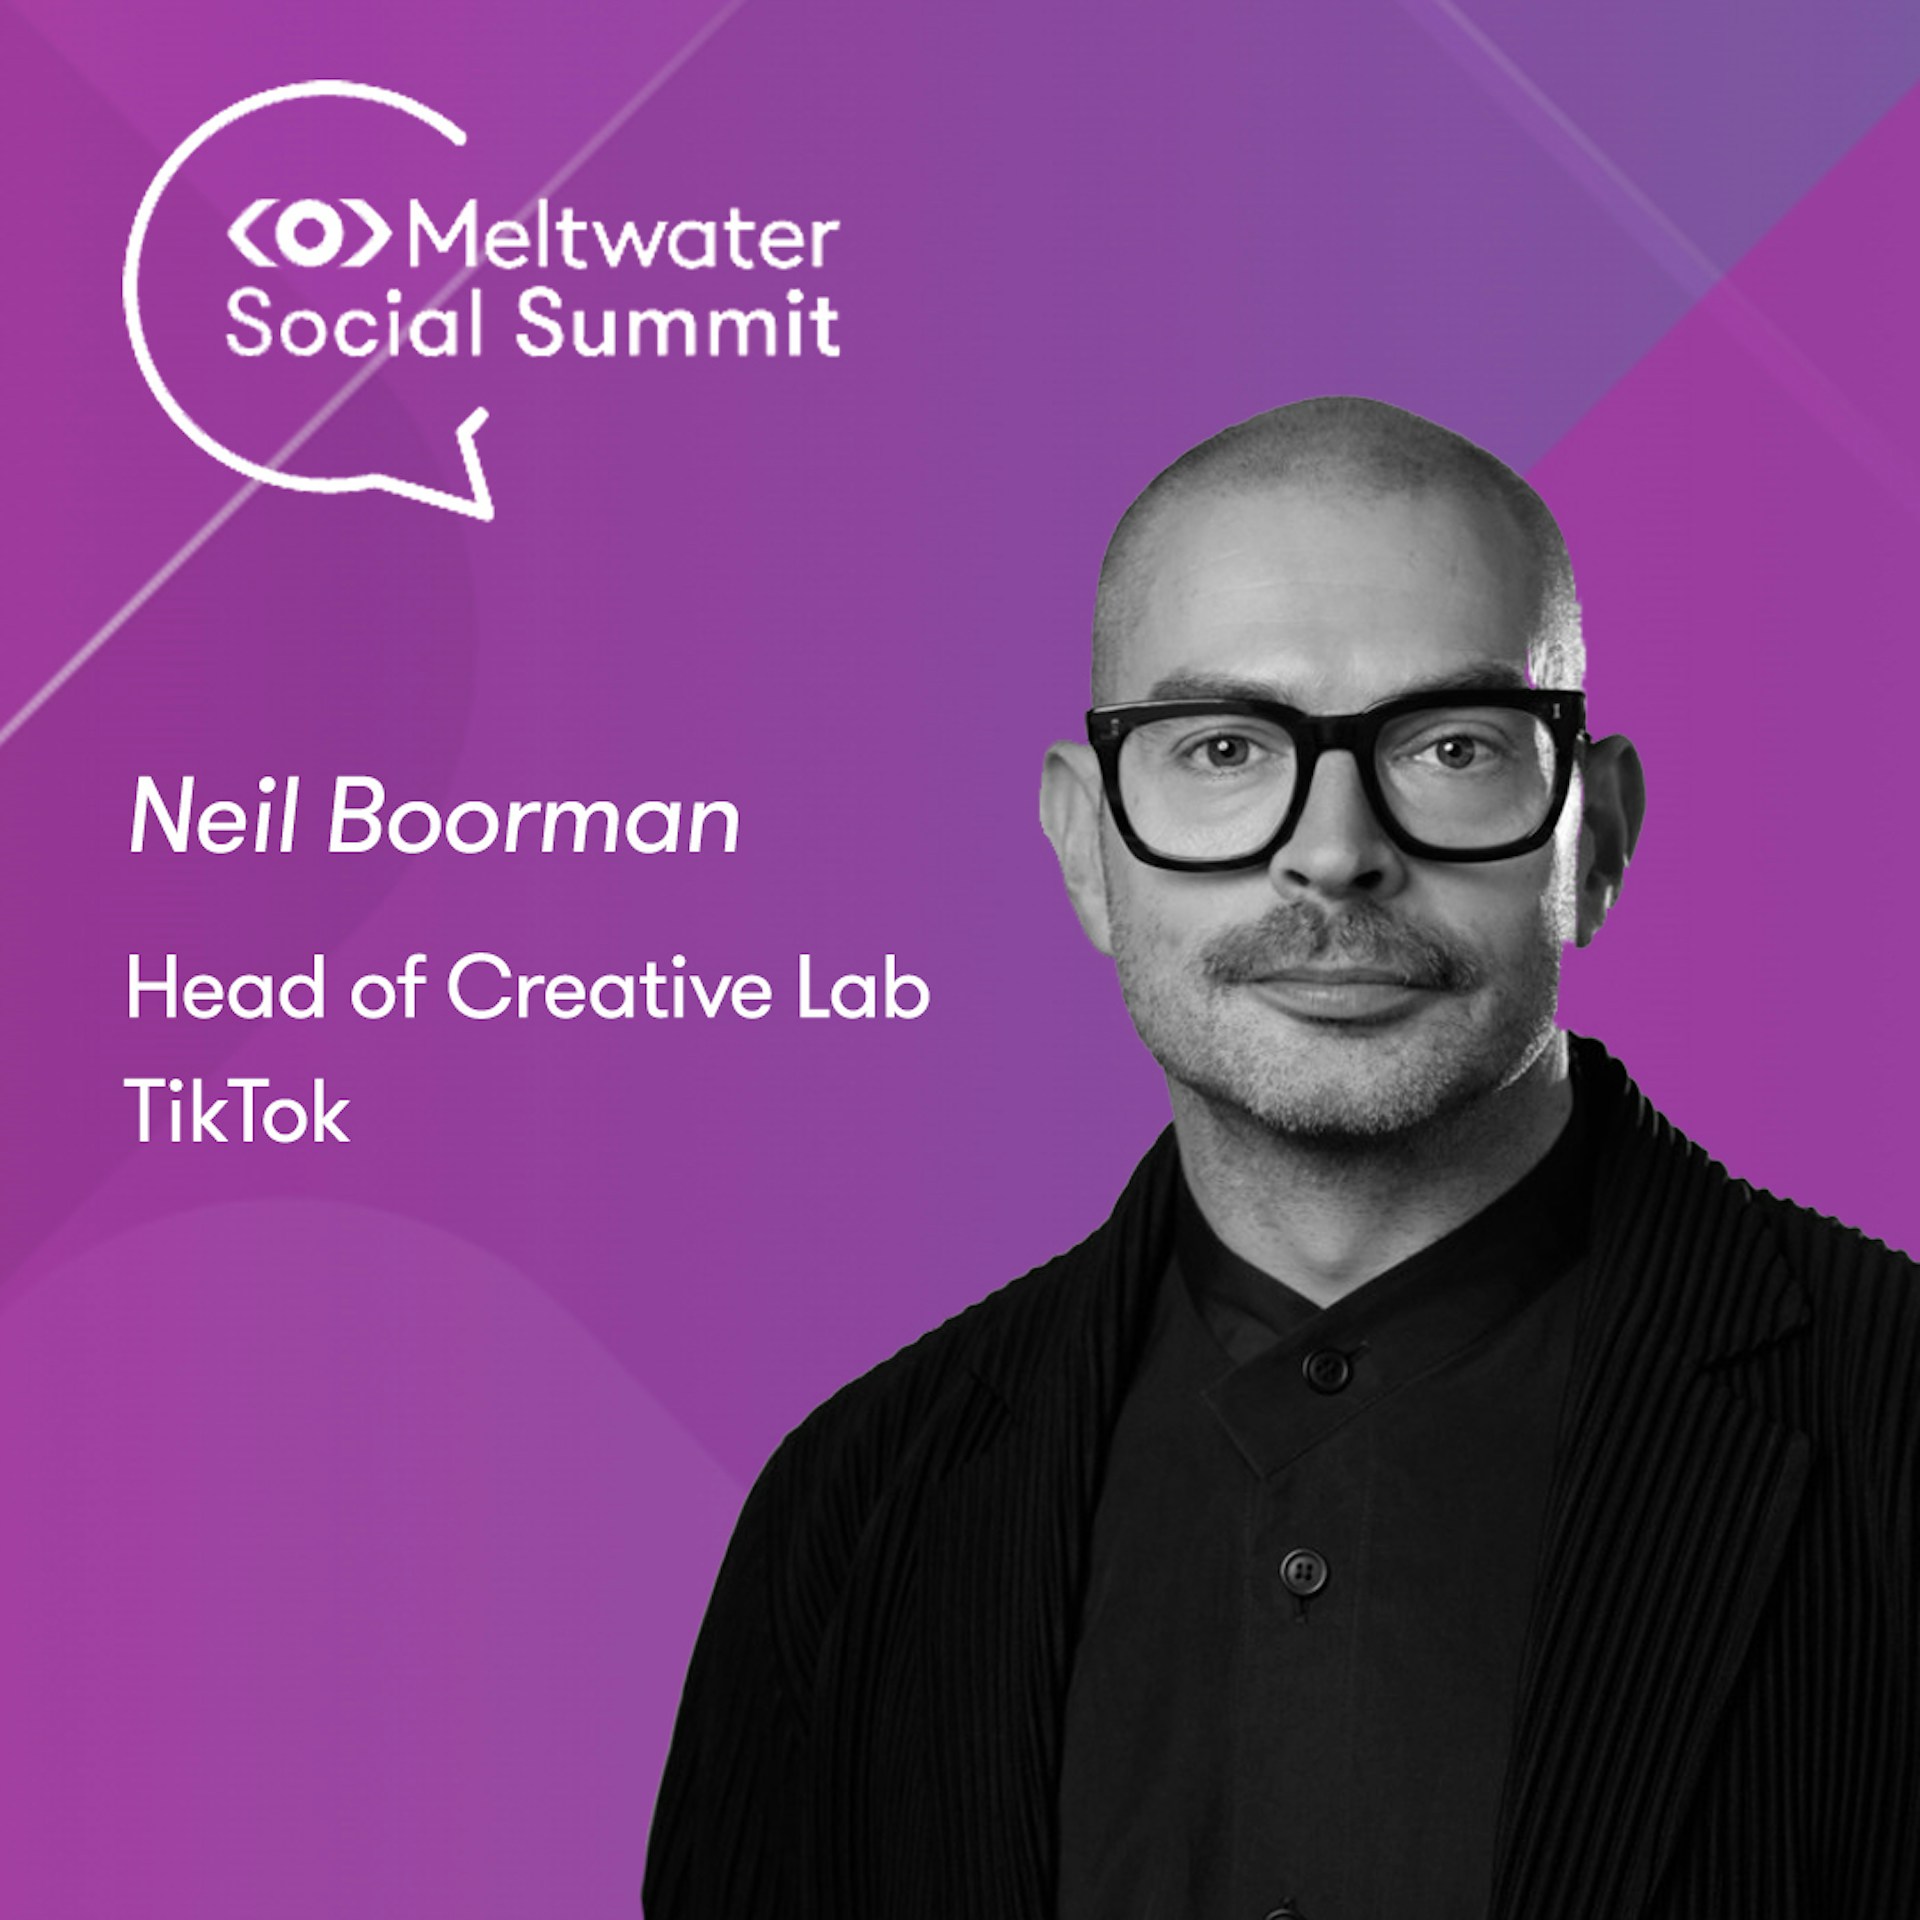 Meltwater Social Summit - Neil Boorman, TikTok